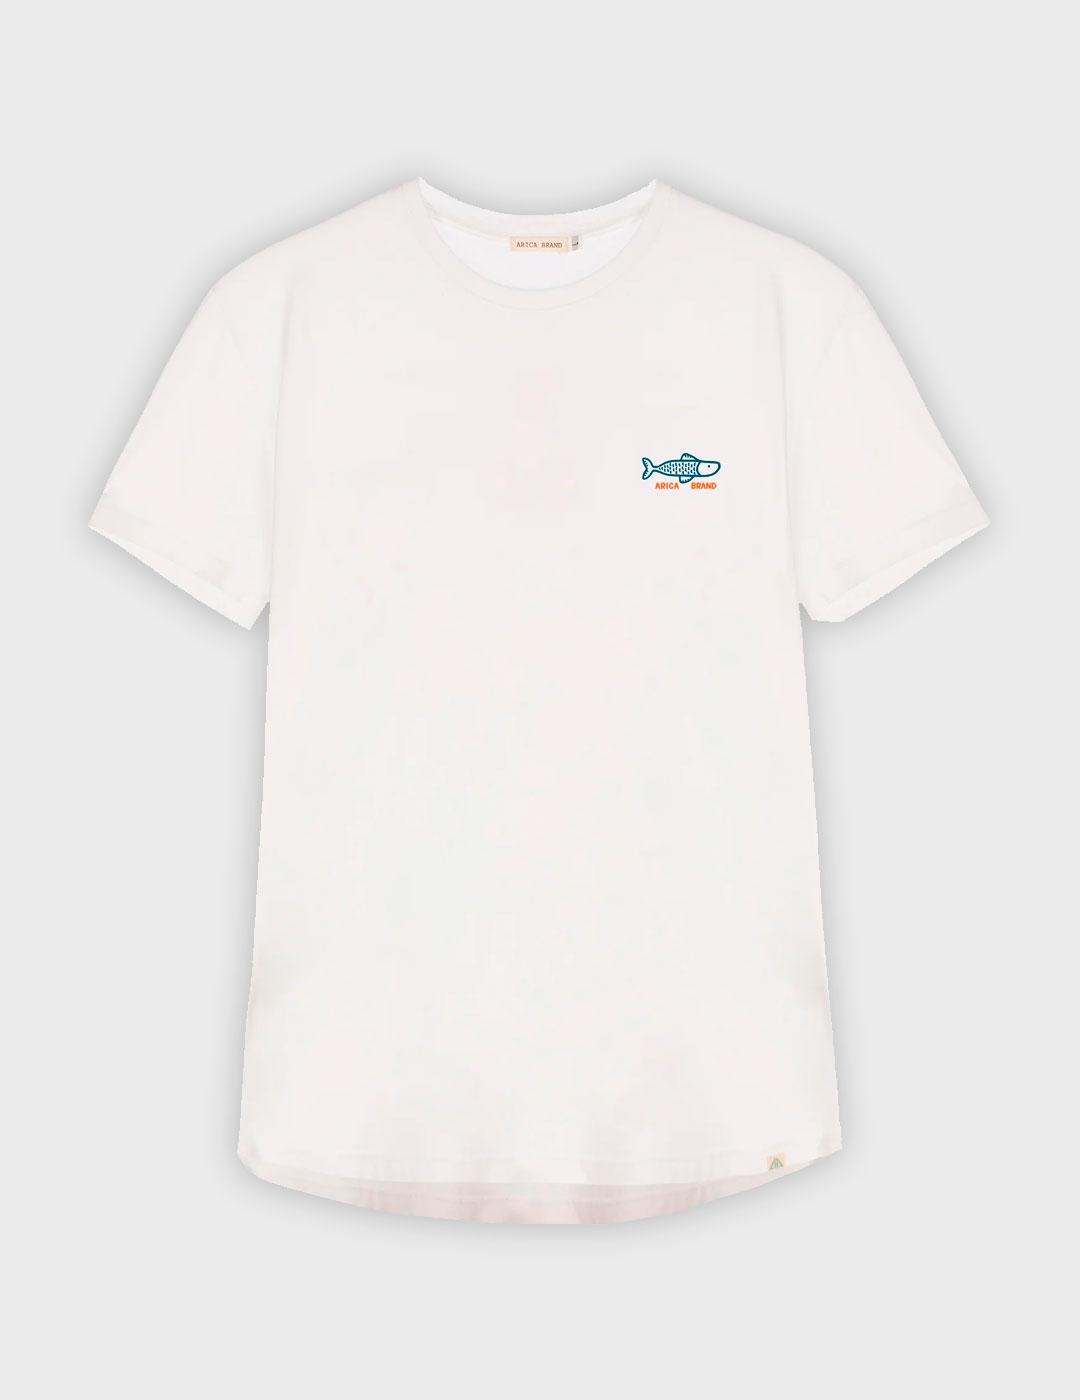 Camiseta Arica Poke House Tee blanca unisex